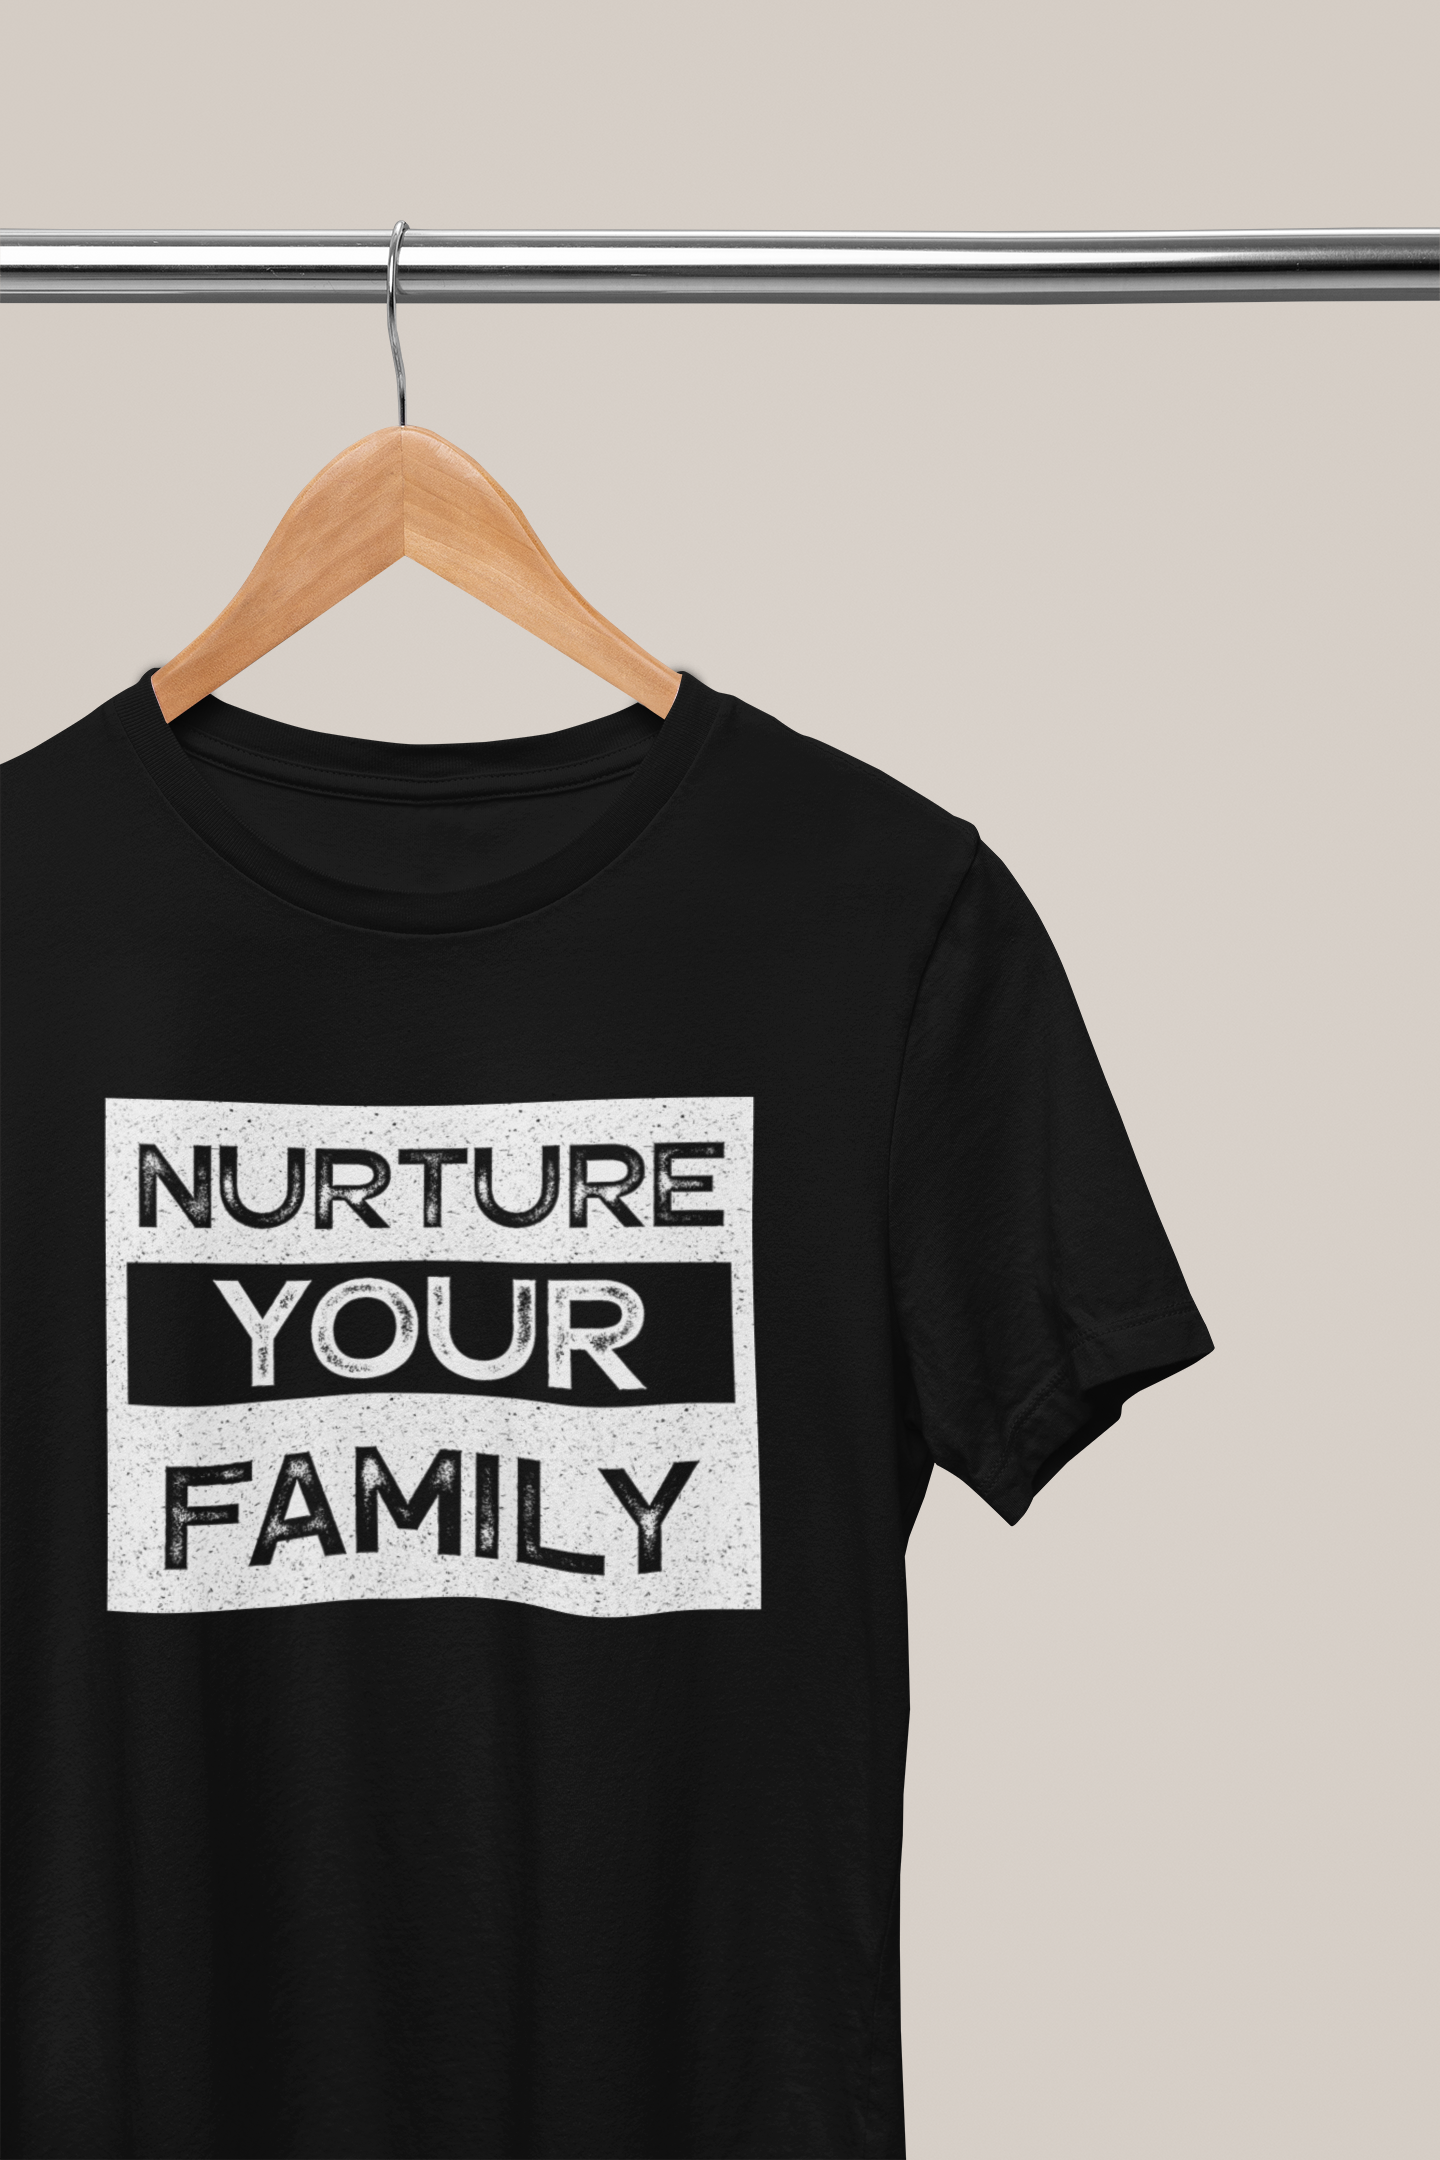 Nurture Your Family, Hoodies, Sweatshirts, Tees, and Mugs